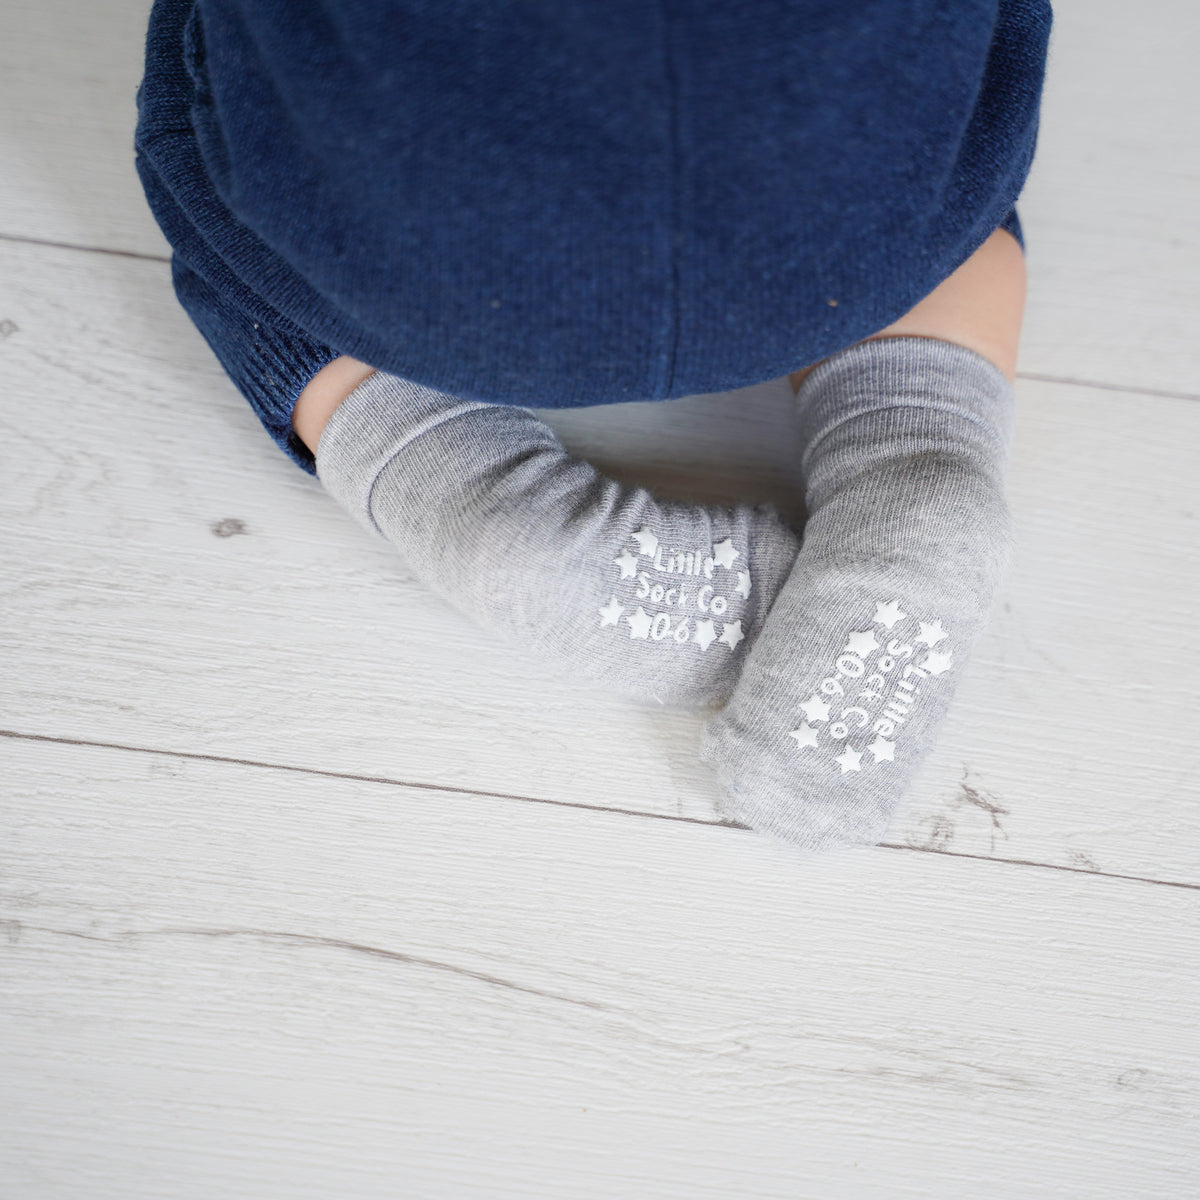 Non-Slip Stay on Baby, Toddler & Child Socks - 5 Pack in Grey 0-6 years - School Socks